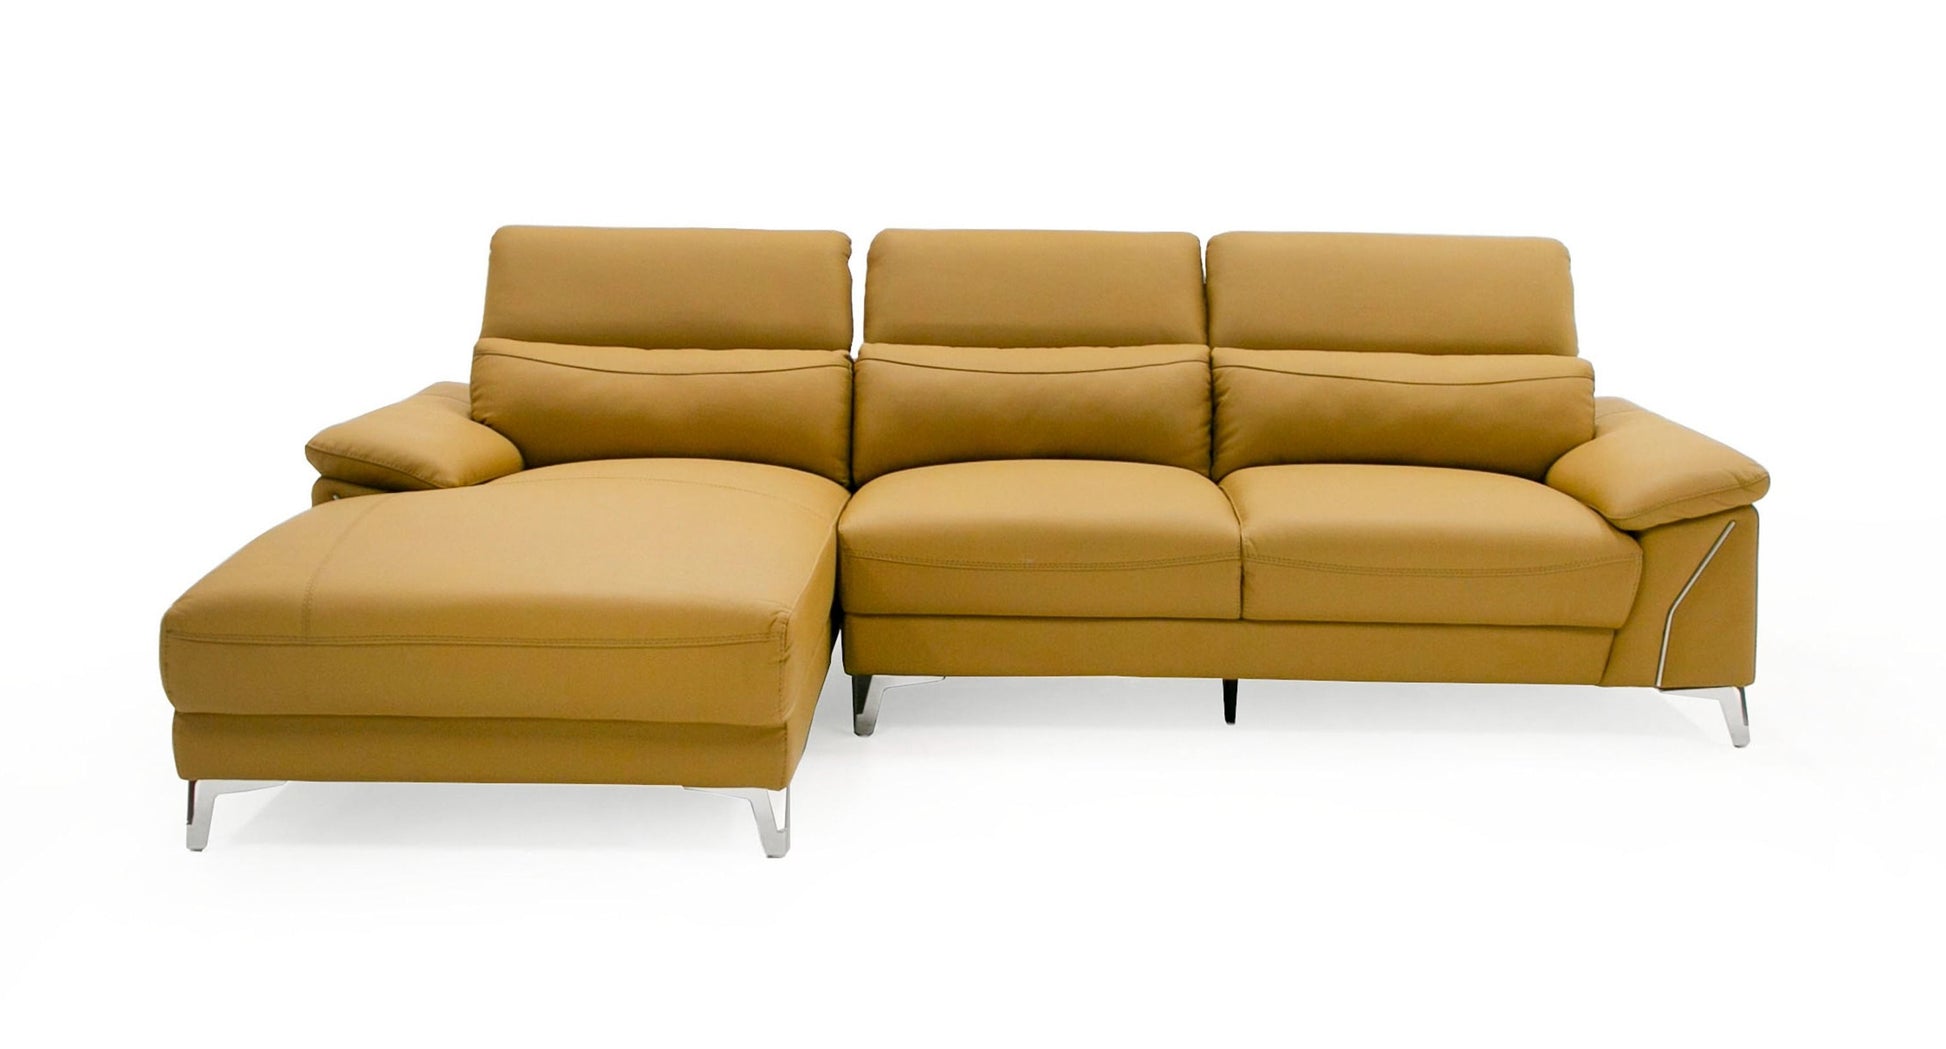 Divani Casa Sura Modern Camel Leather  Sectional Sofa 2